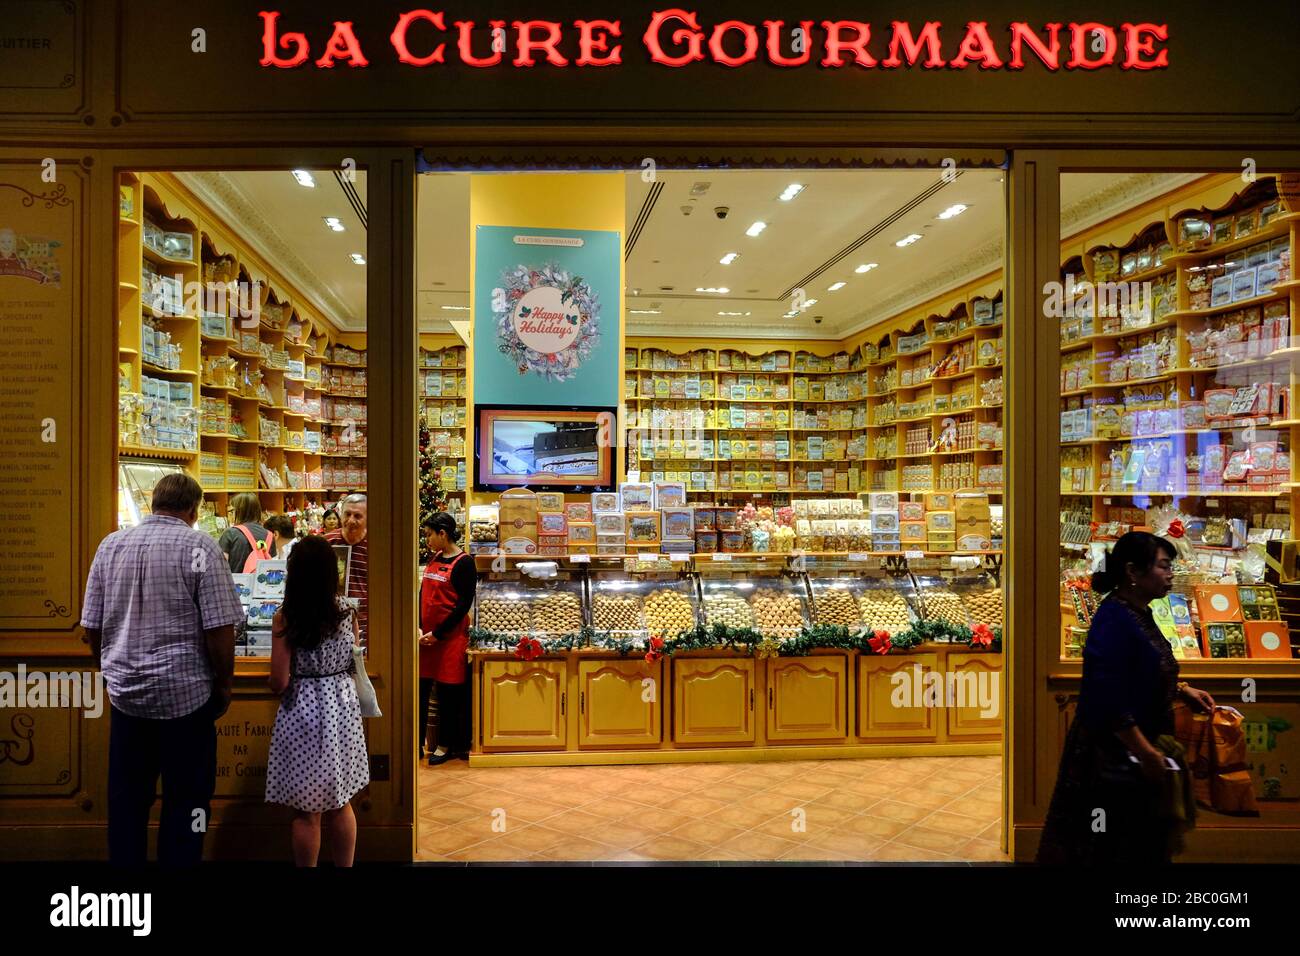 La Cure Gourmande tienda gourmet ventana dentro del gigantesco Dubai Mall en el centro de Dubai, Emiratos Árabes Unidos. Foto de stock